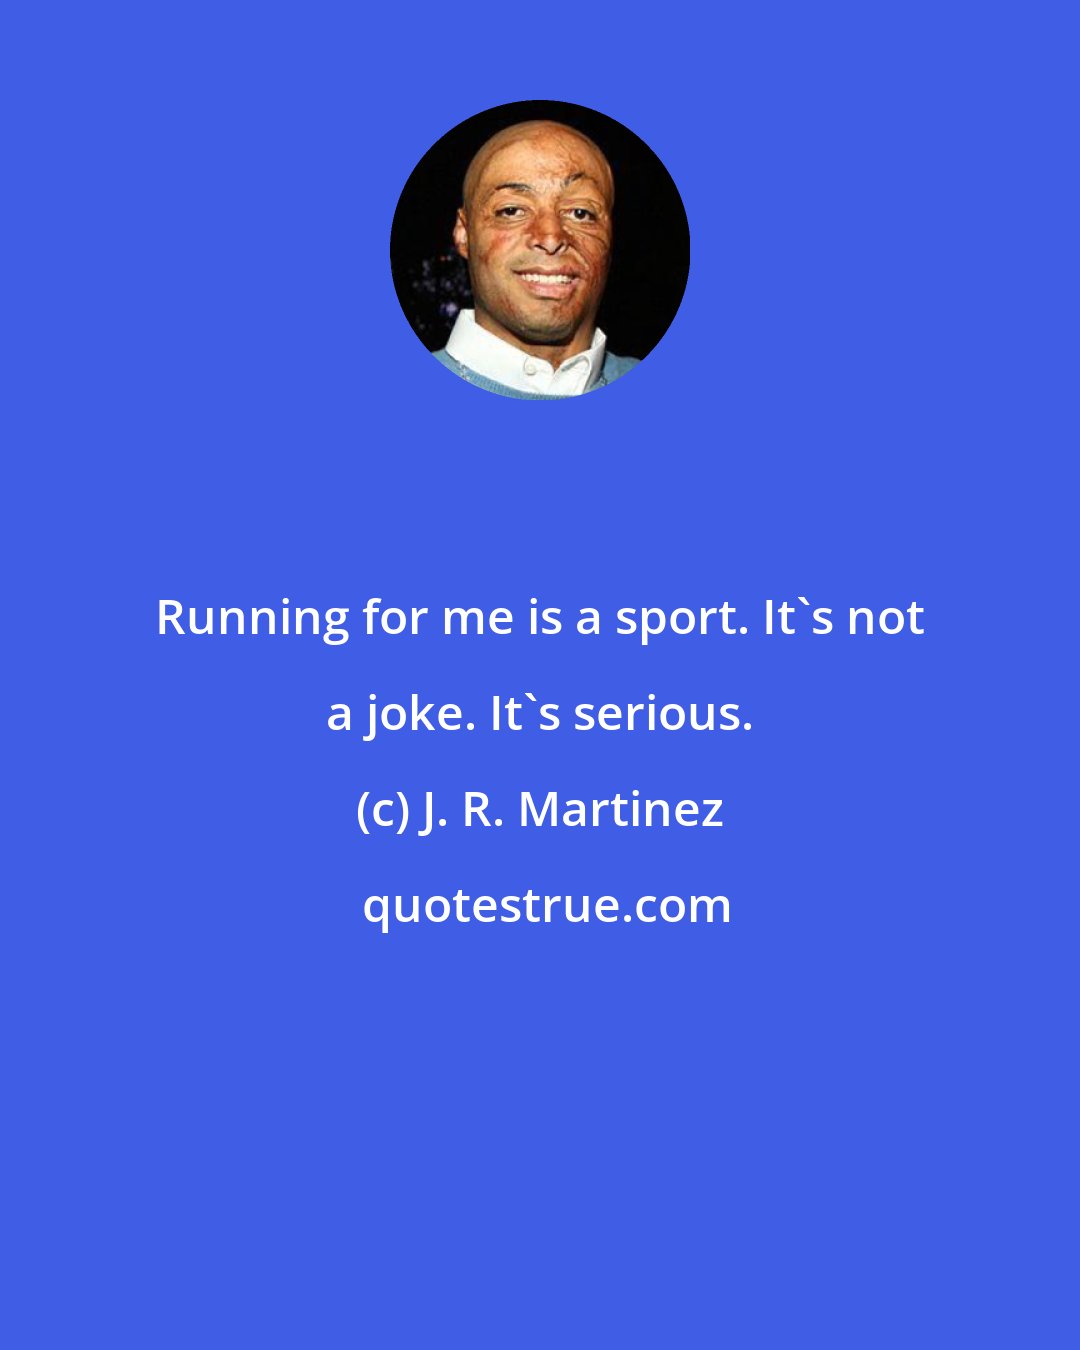 J. R. Martinez: Running for me is a sport. It's not a joke. It's serious.